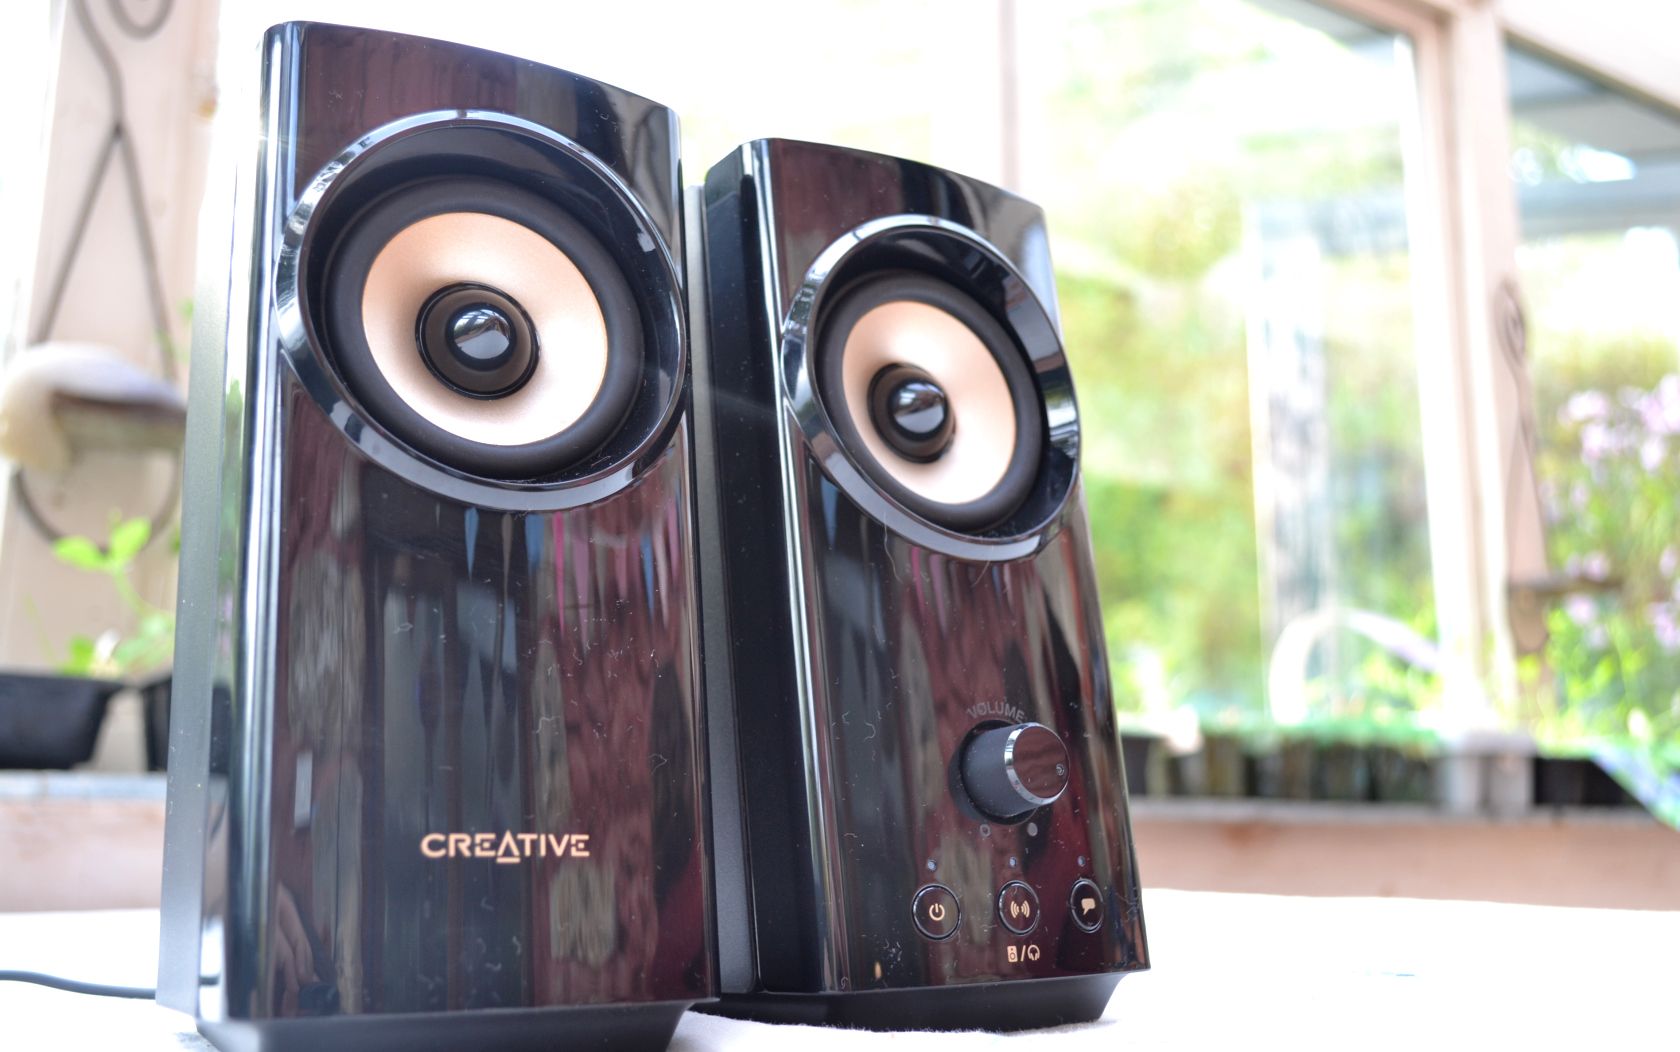 creative t60 speakers side by side